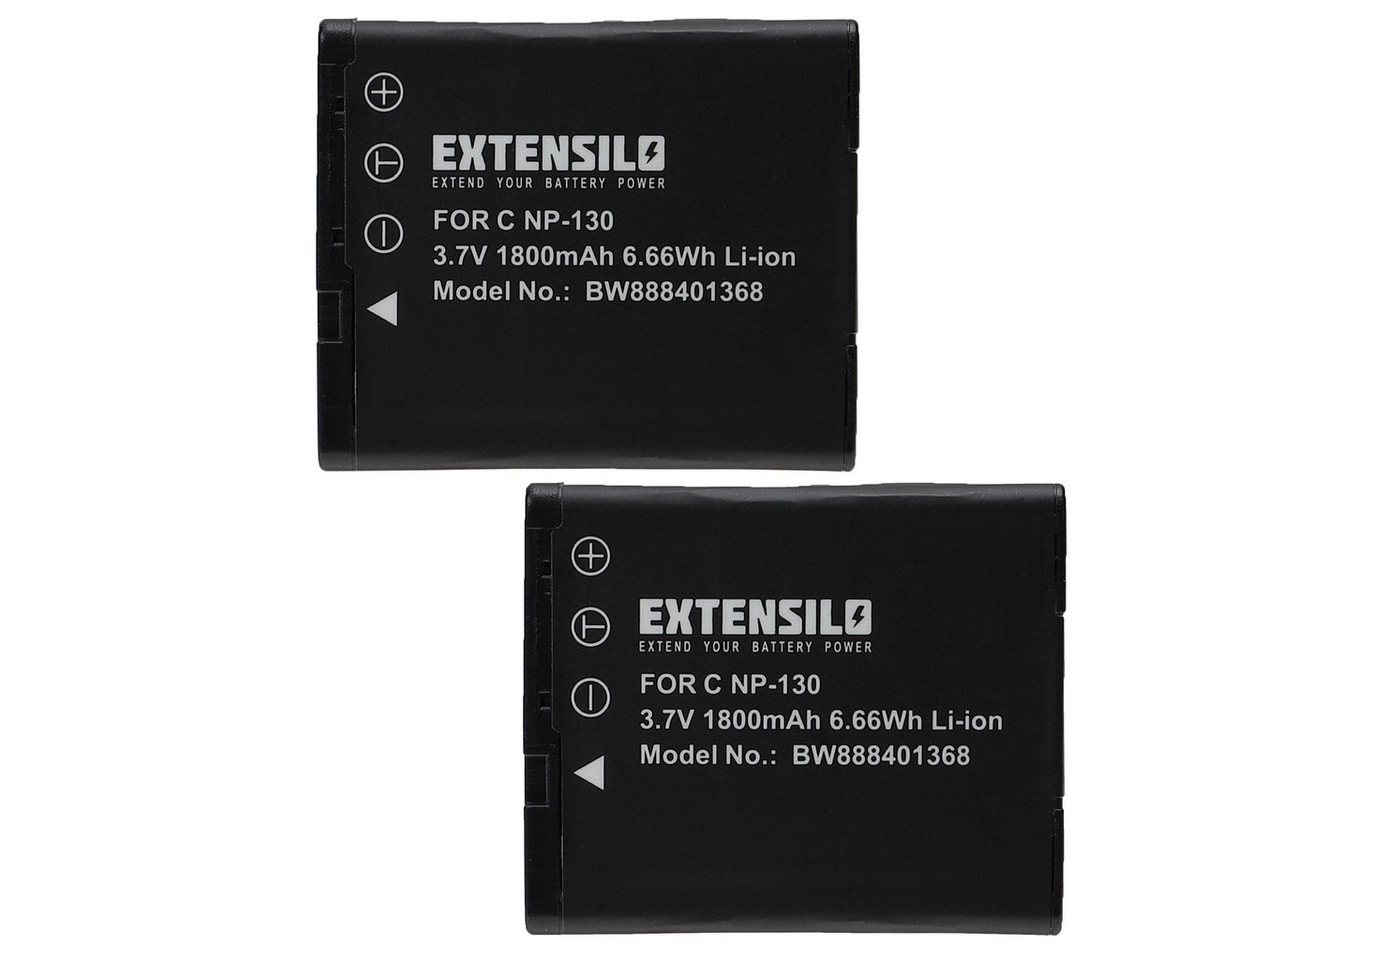 Extensilo passend für Casio Exilim EX-ZR200, EX-ZR100, EX-H30, EX-ZR300 Kamera / Foto Digitalkamera (1800mAh, 3,7V, Li-Ion) Kamera-Akku 1800 mAh von Extensilo